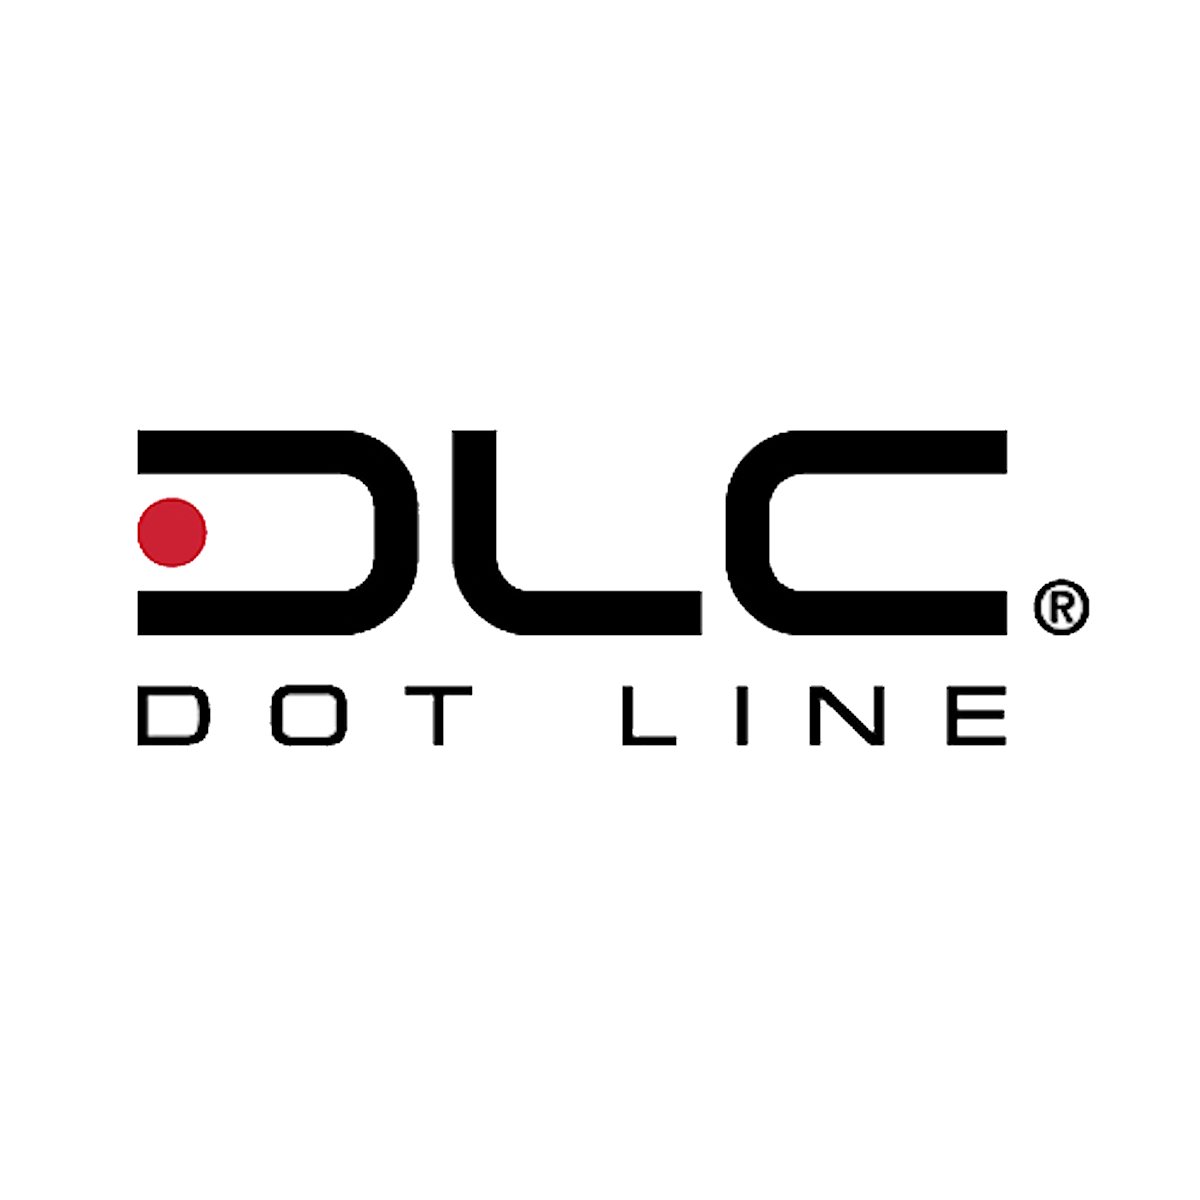 Dot Line